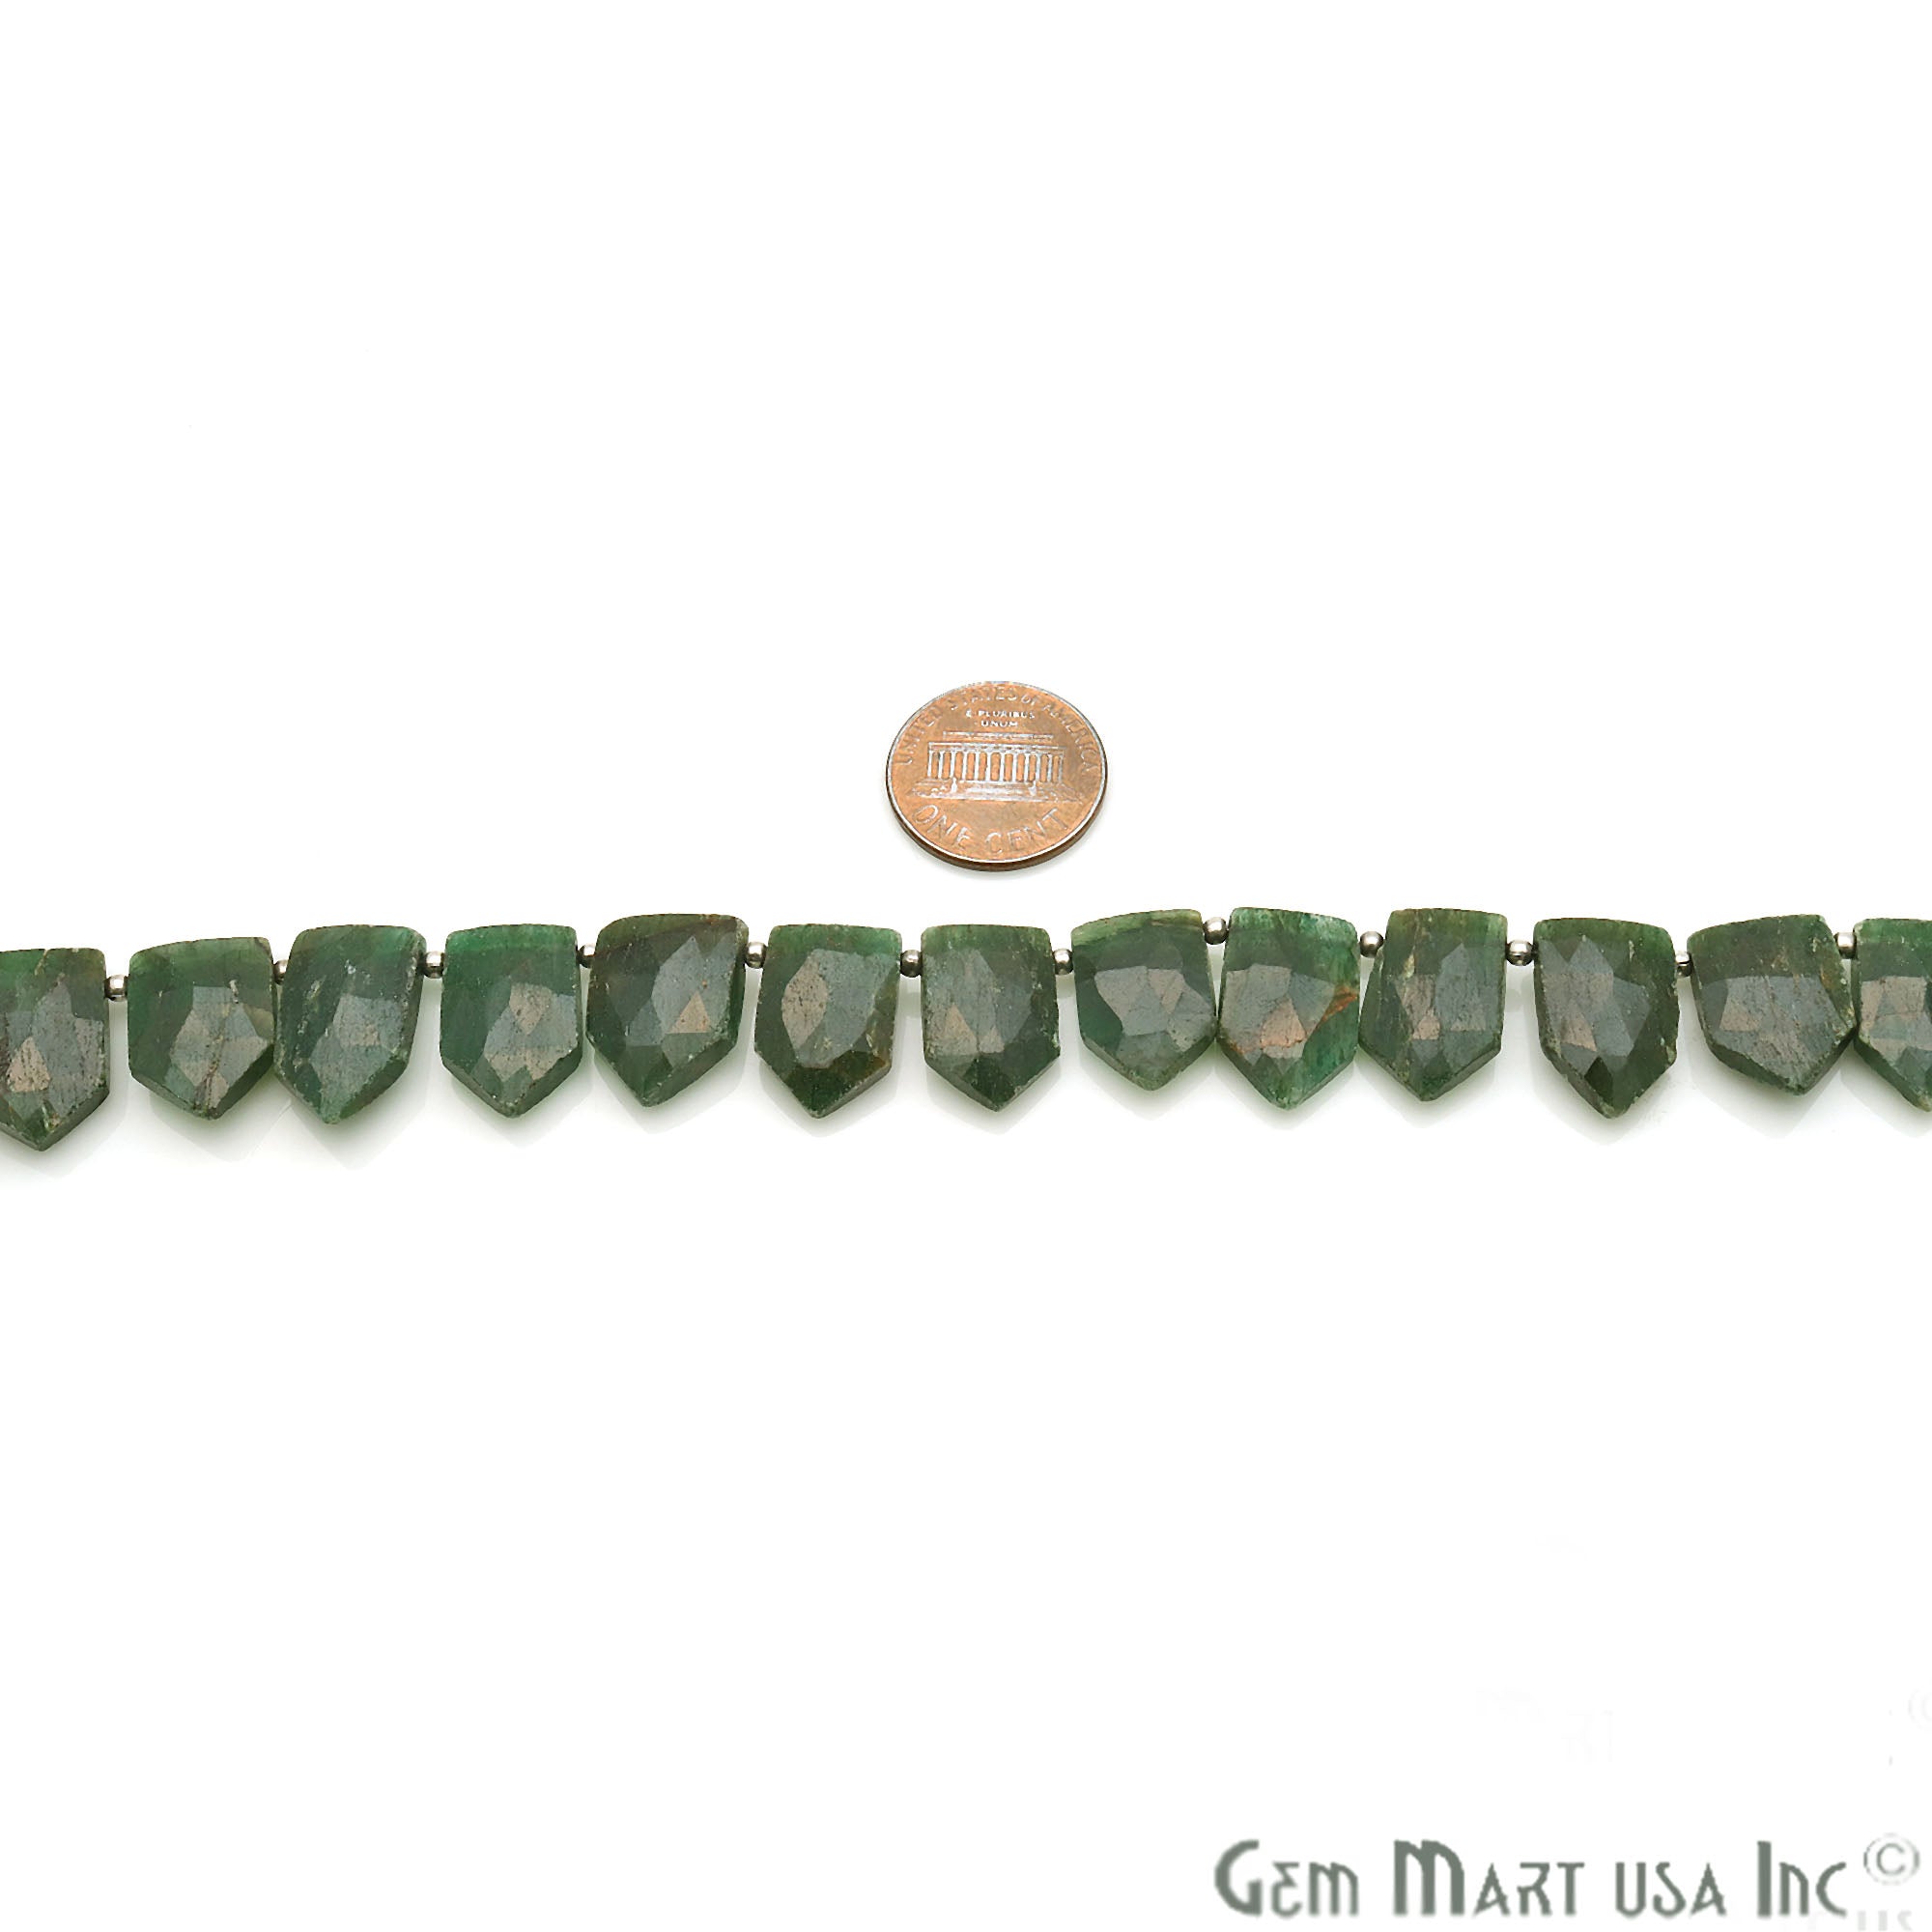 Blood Stone Pentagon 18x12mm Crafting Beads Gemstone Briolette Strands 8 Inch - GemMartUSA